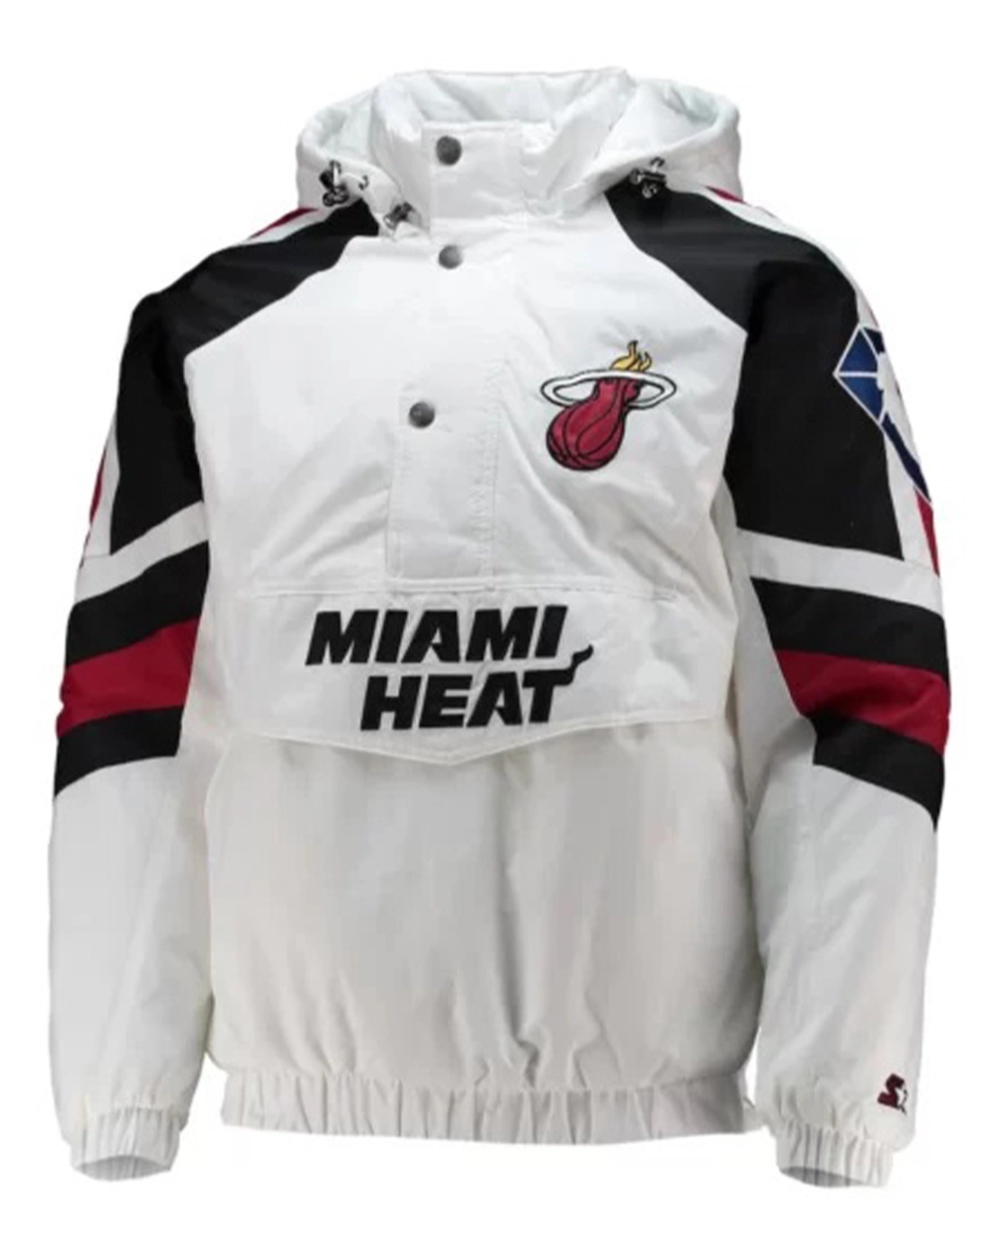 hosea-doyle Hosea Doyle Miami Heat White Pullover Jacket